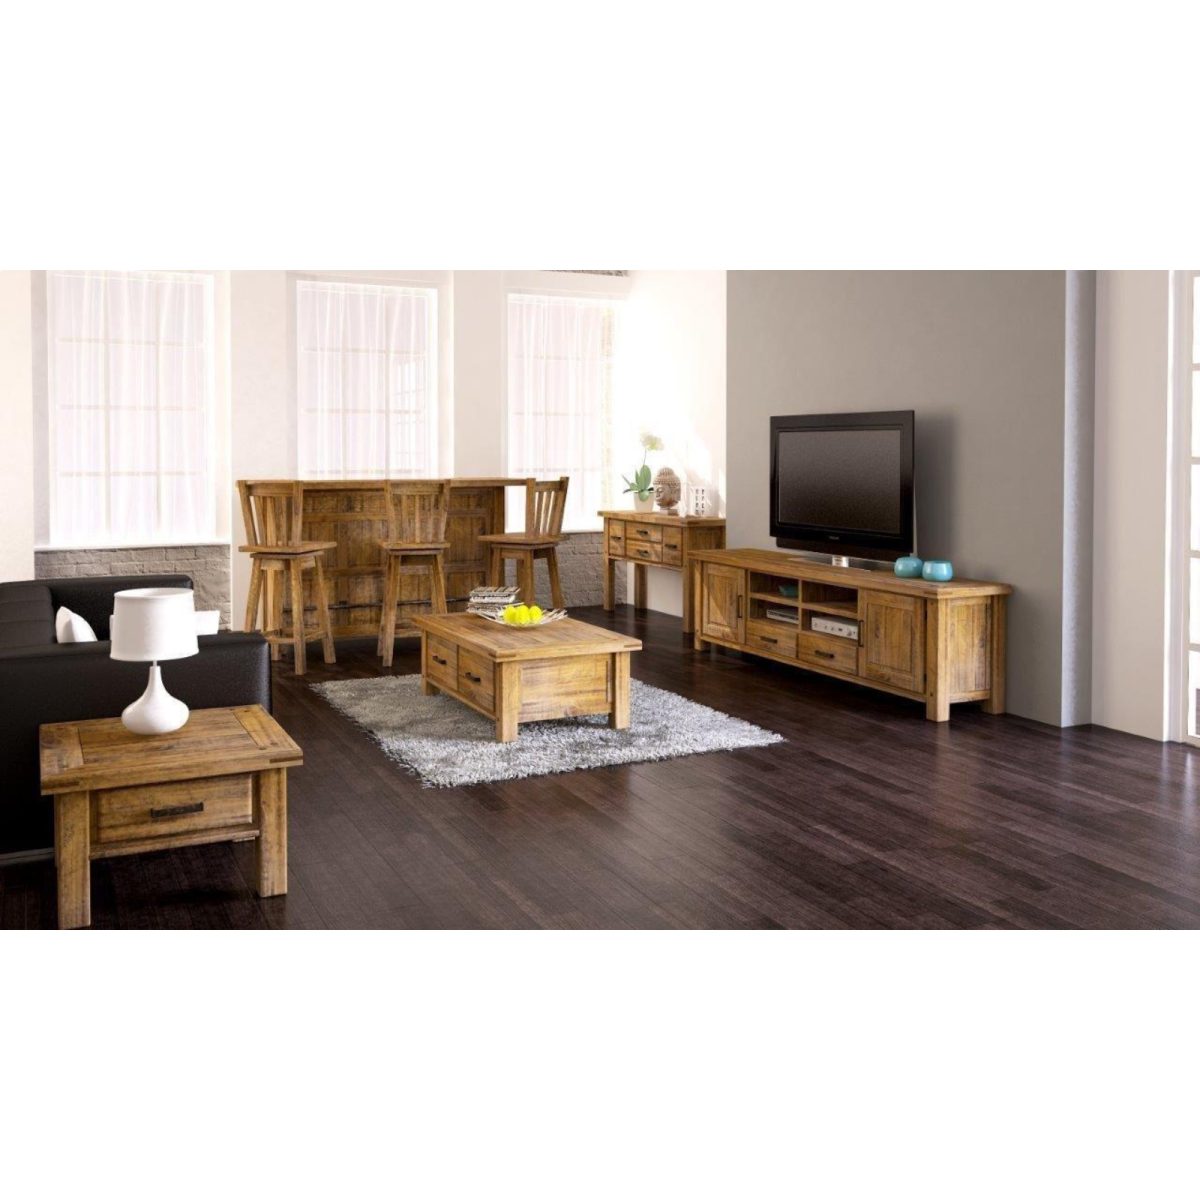 Teasel ETU Entertainment TV Unit 240cm 2 Drawer Solid Pine Wood – Rustic Oak